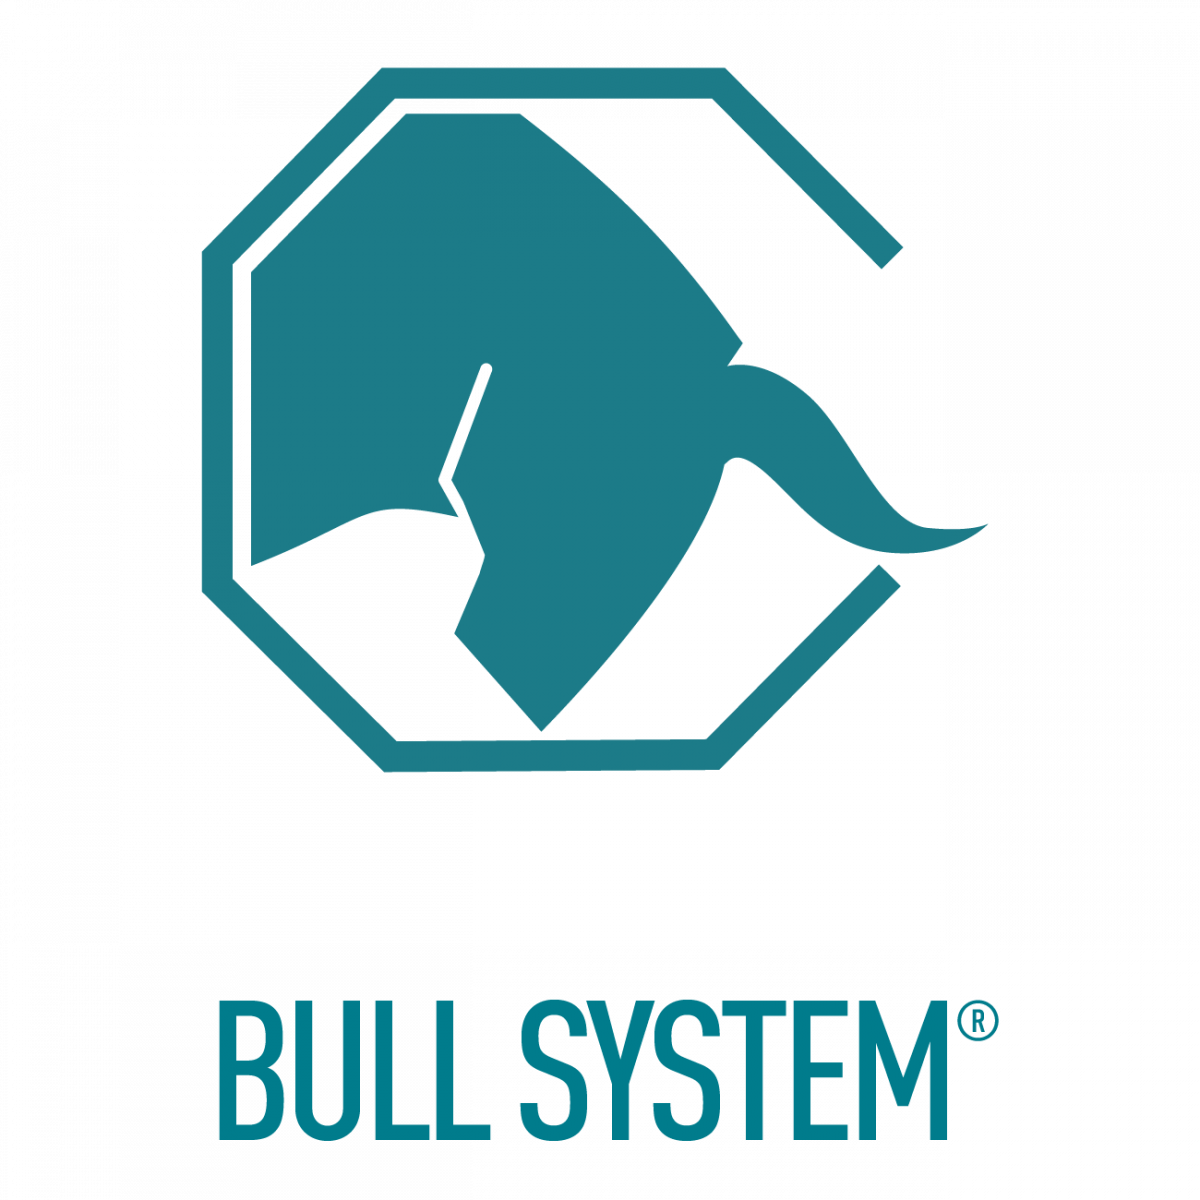 Eureka bull system